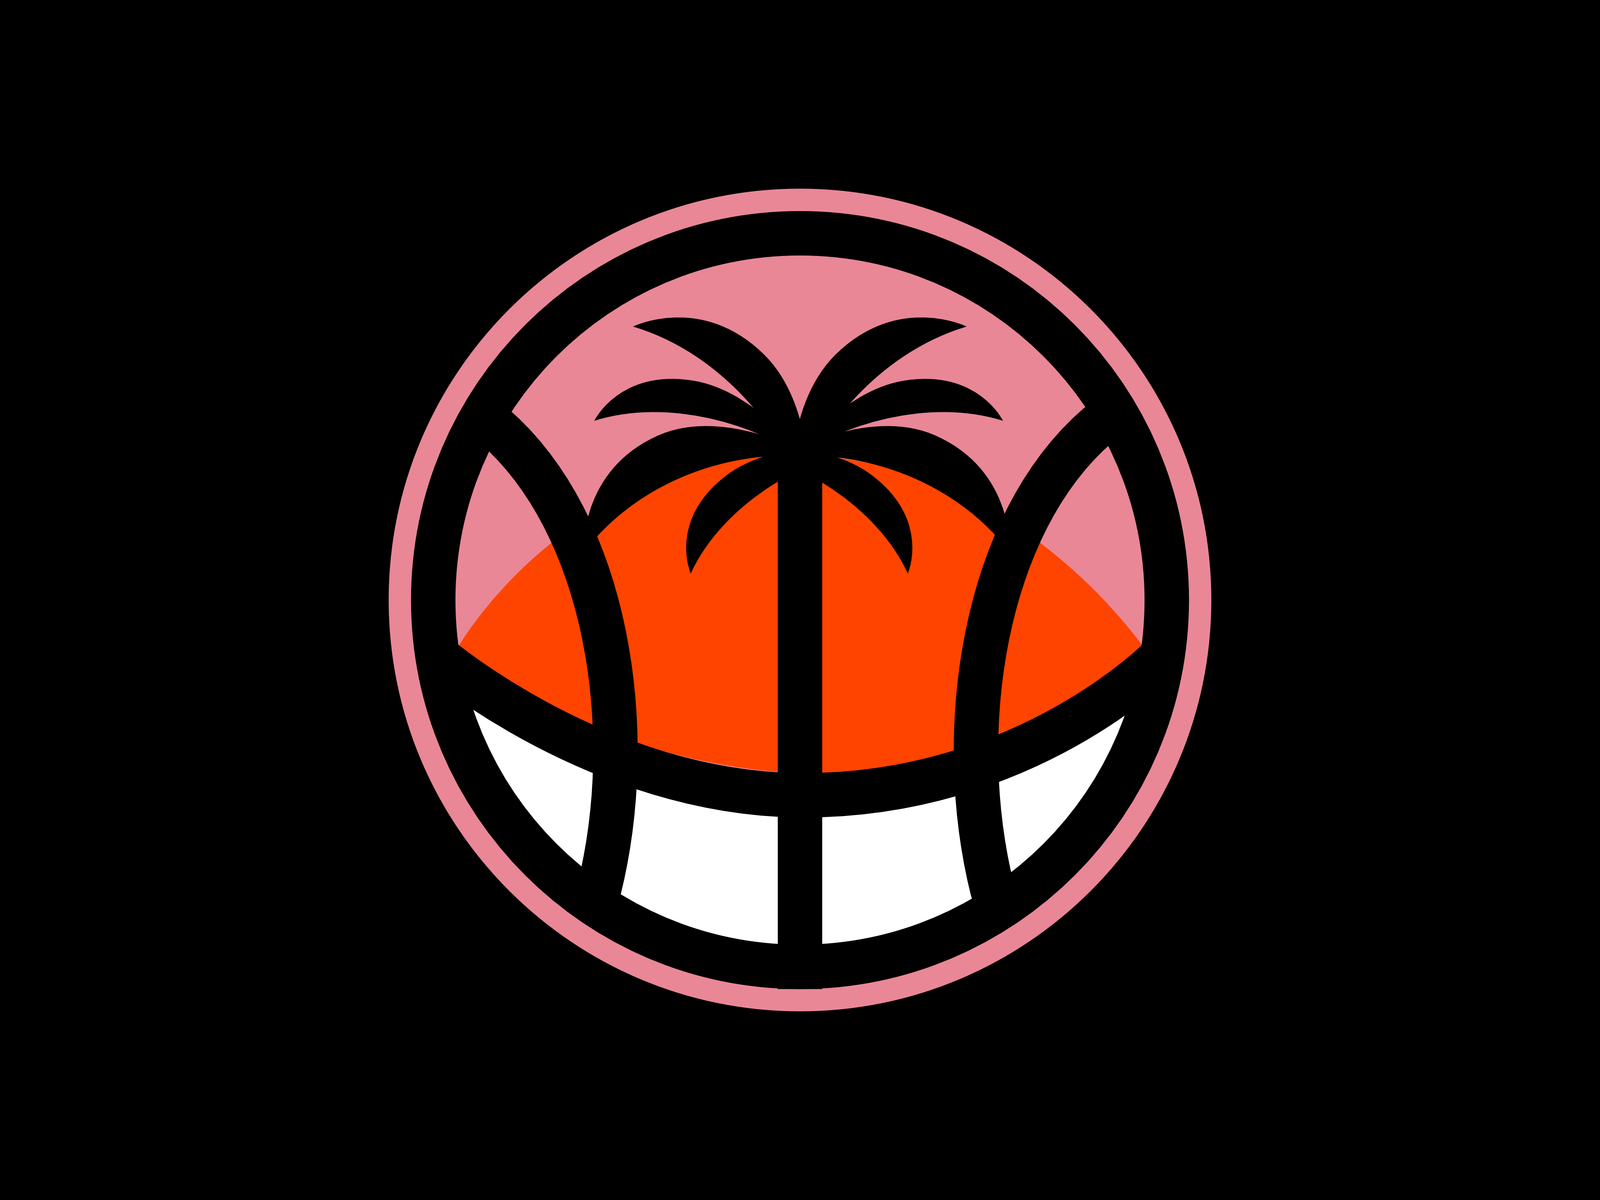 Miami Basketball on Redbubble & Cotton Bureau by Matt Curley on Dribbble